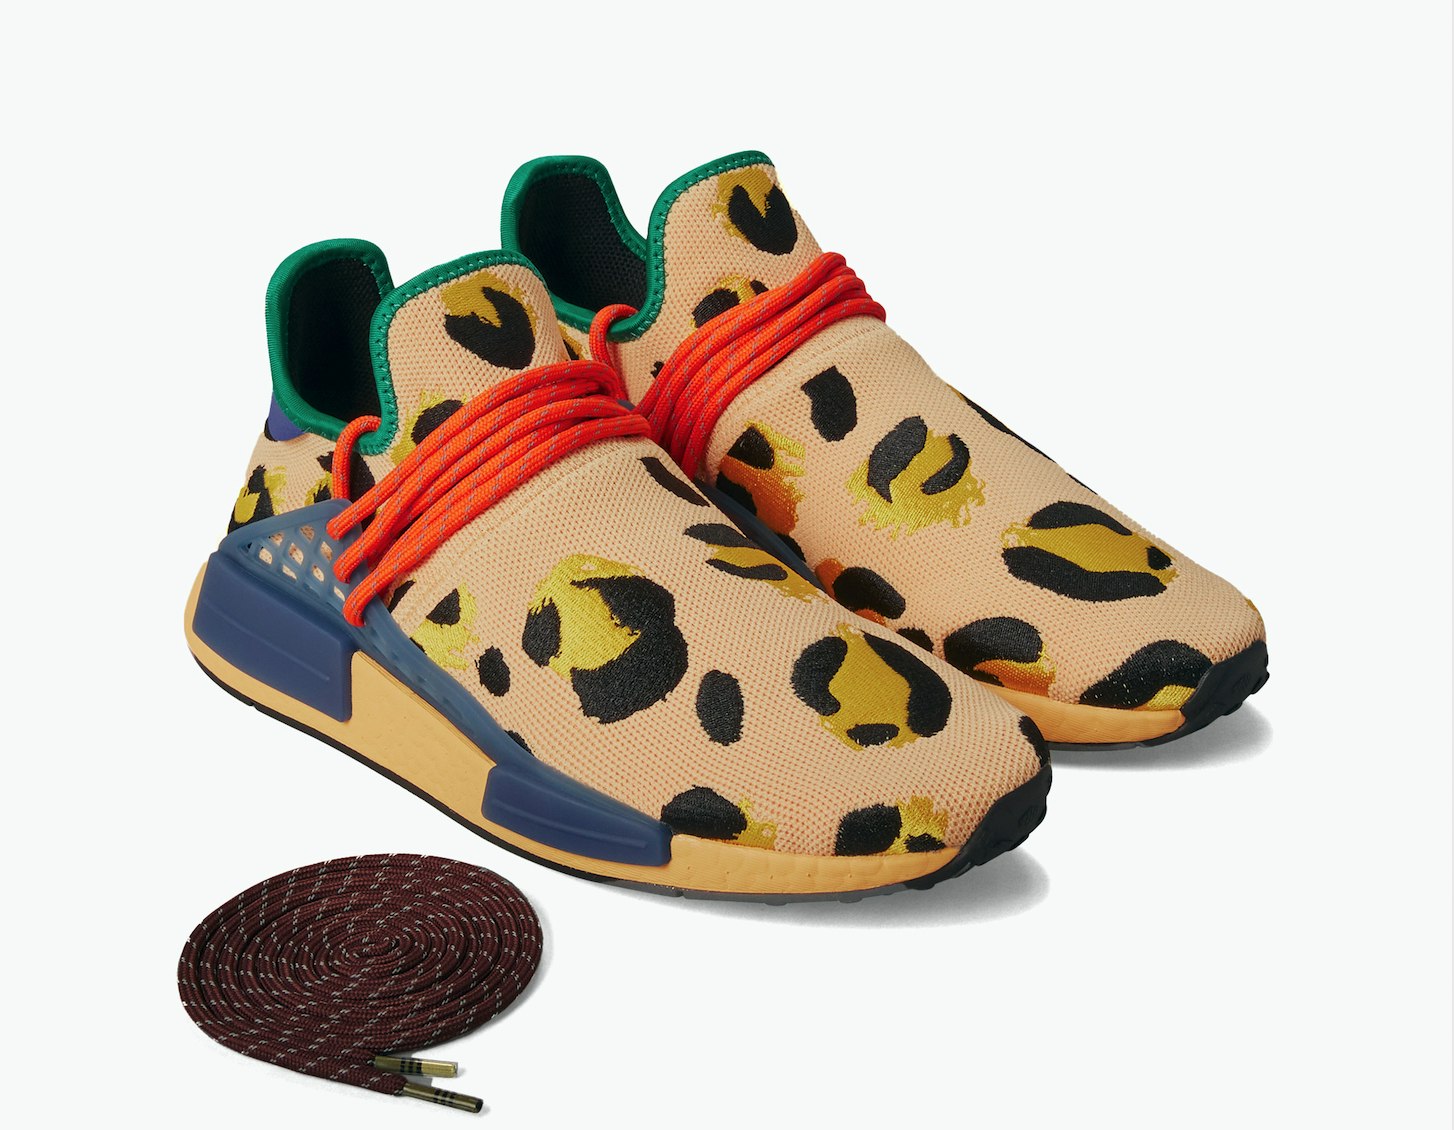 Pharrell Williams x adidas NMD Hu "Cheetah"